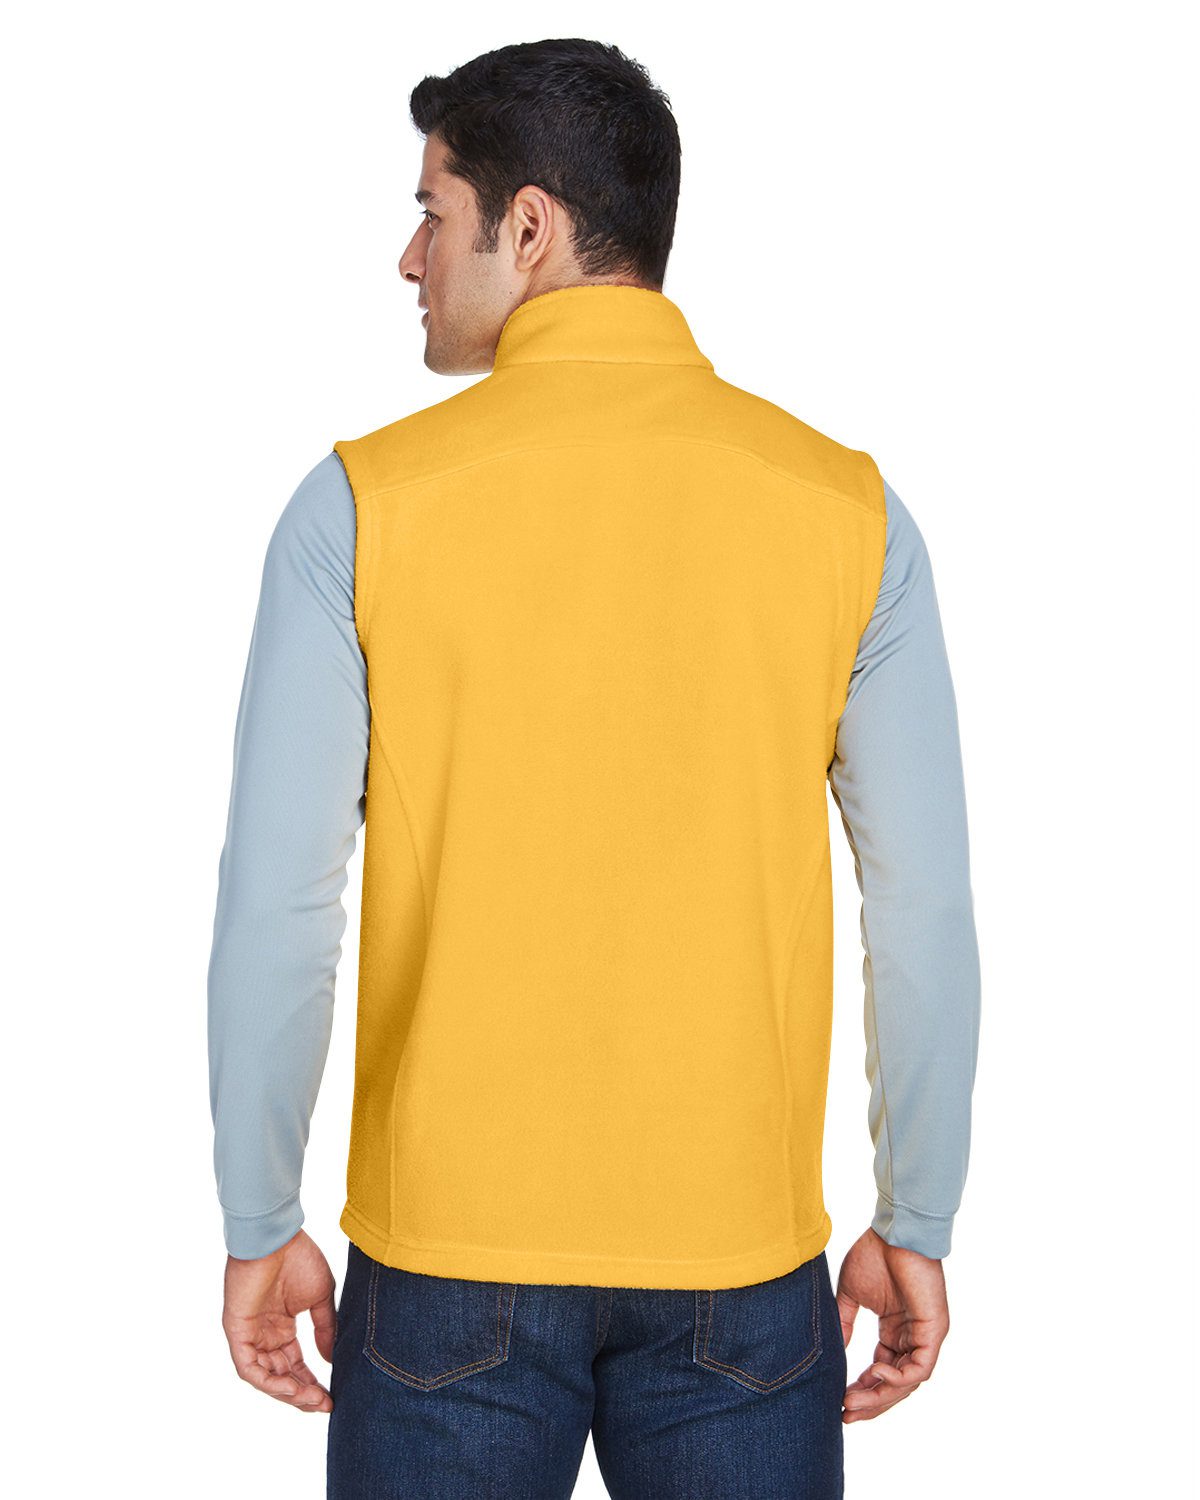 Core 365 Men's Journey Fleece Vest #88191 Gold Back